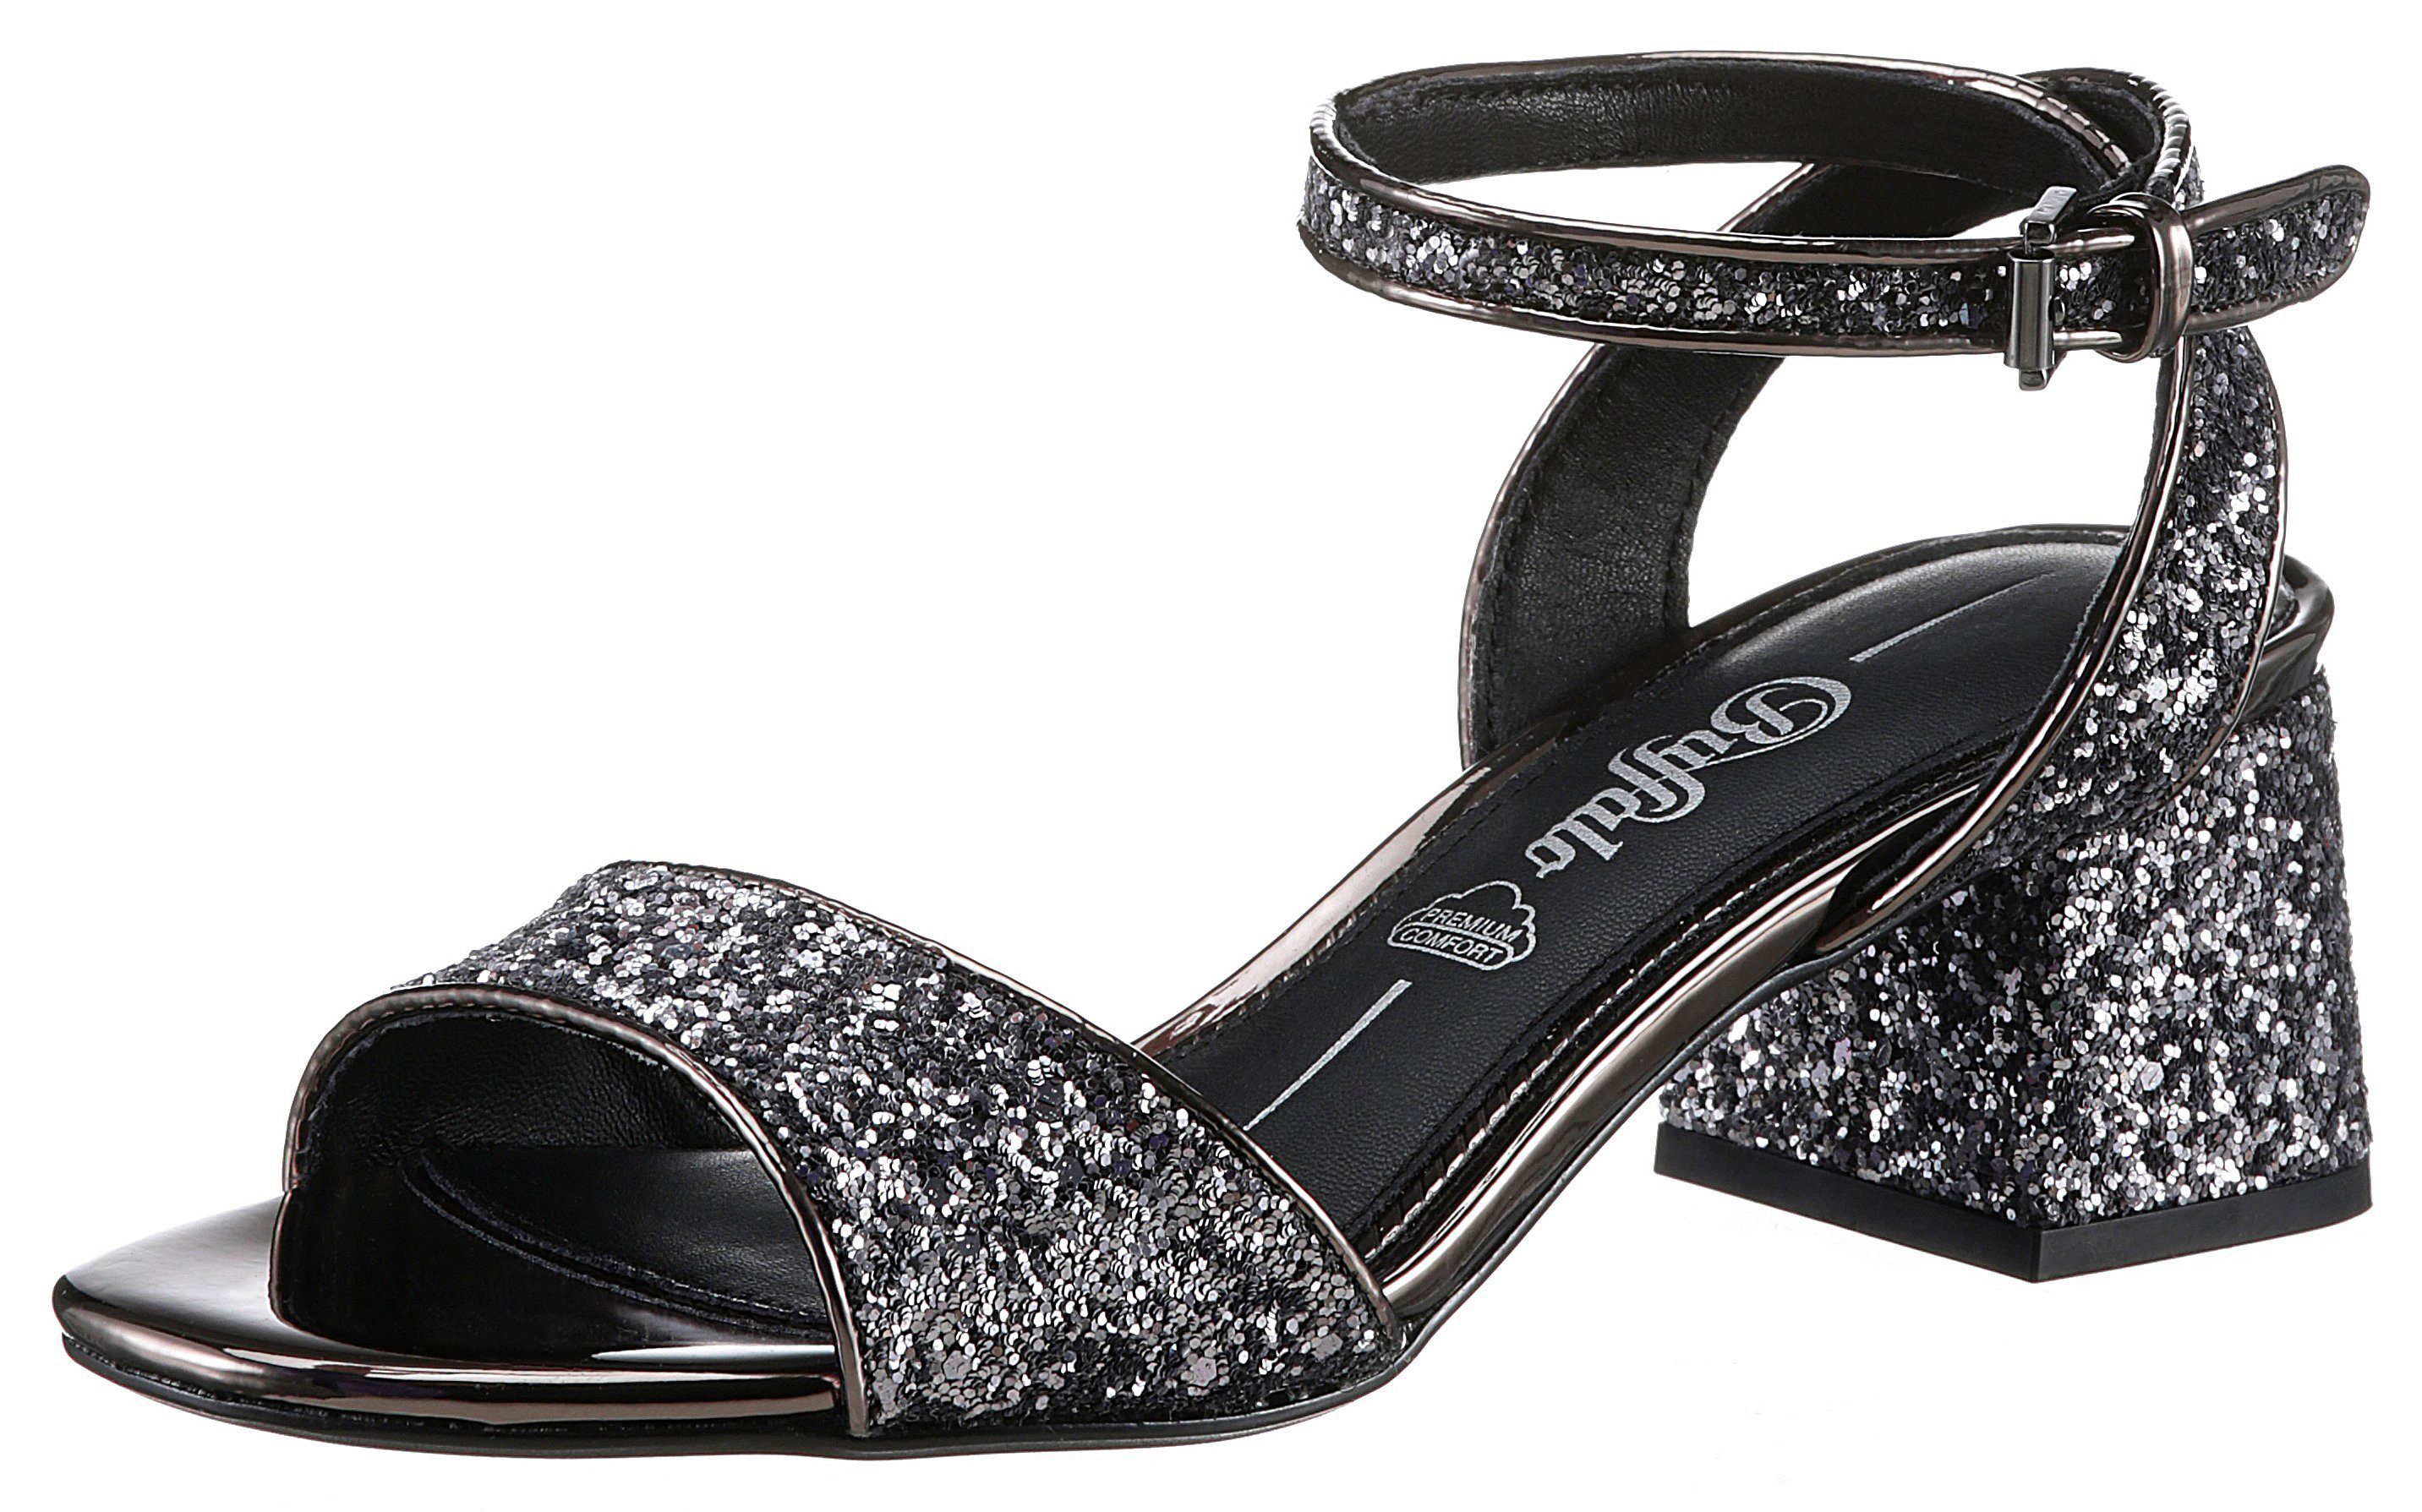 Buffalo RAINFELLE Sandalette mit gepolsterter Memory Foam Innensohle grau silberfarben metallic